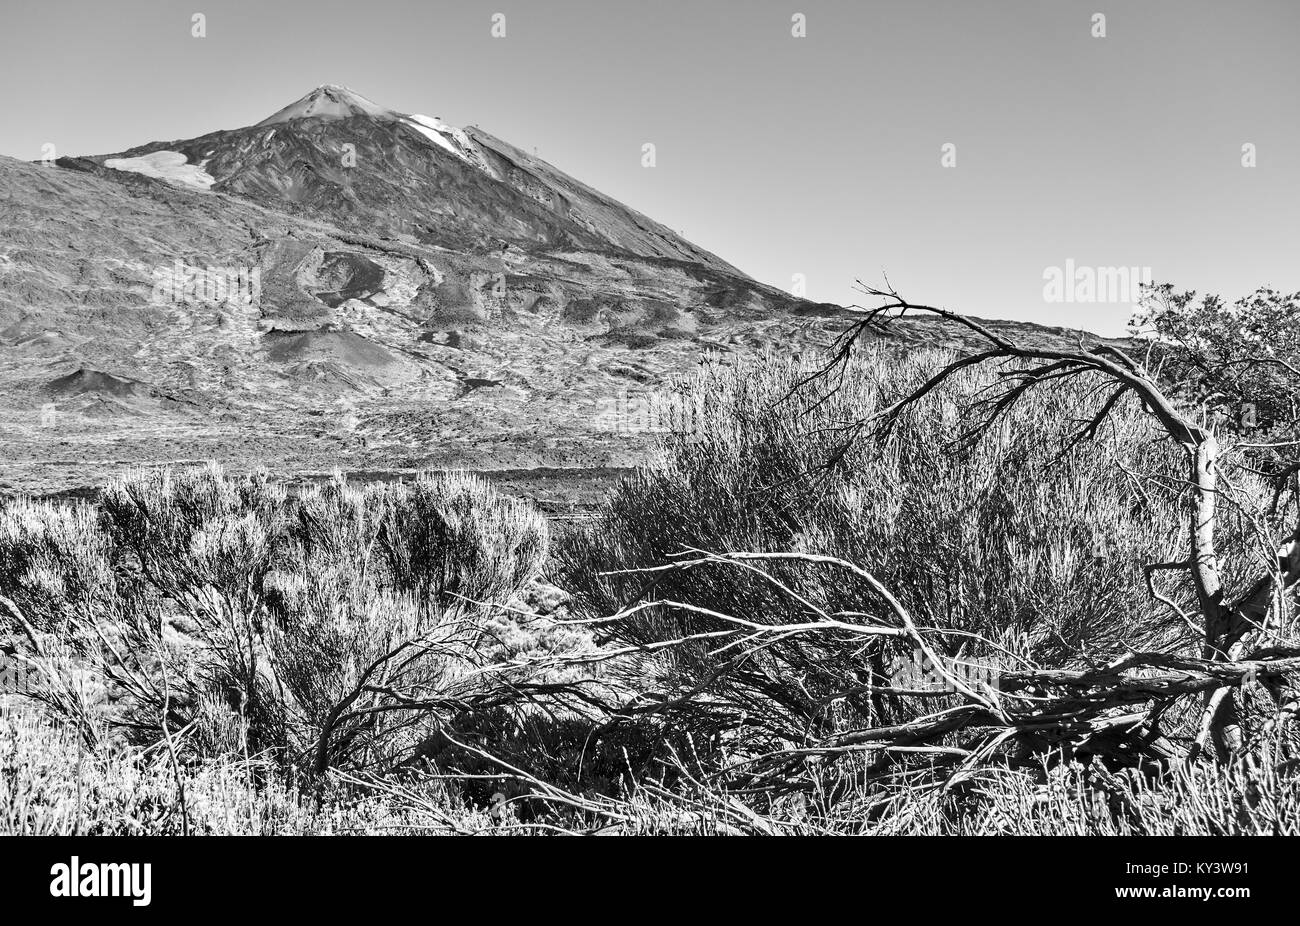 The Teide volcano (Pico del Teide) in Tenerife,  Canary Islands. Black and white landscape Stock Photo